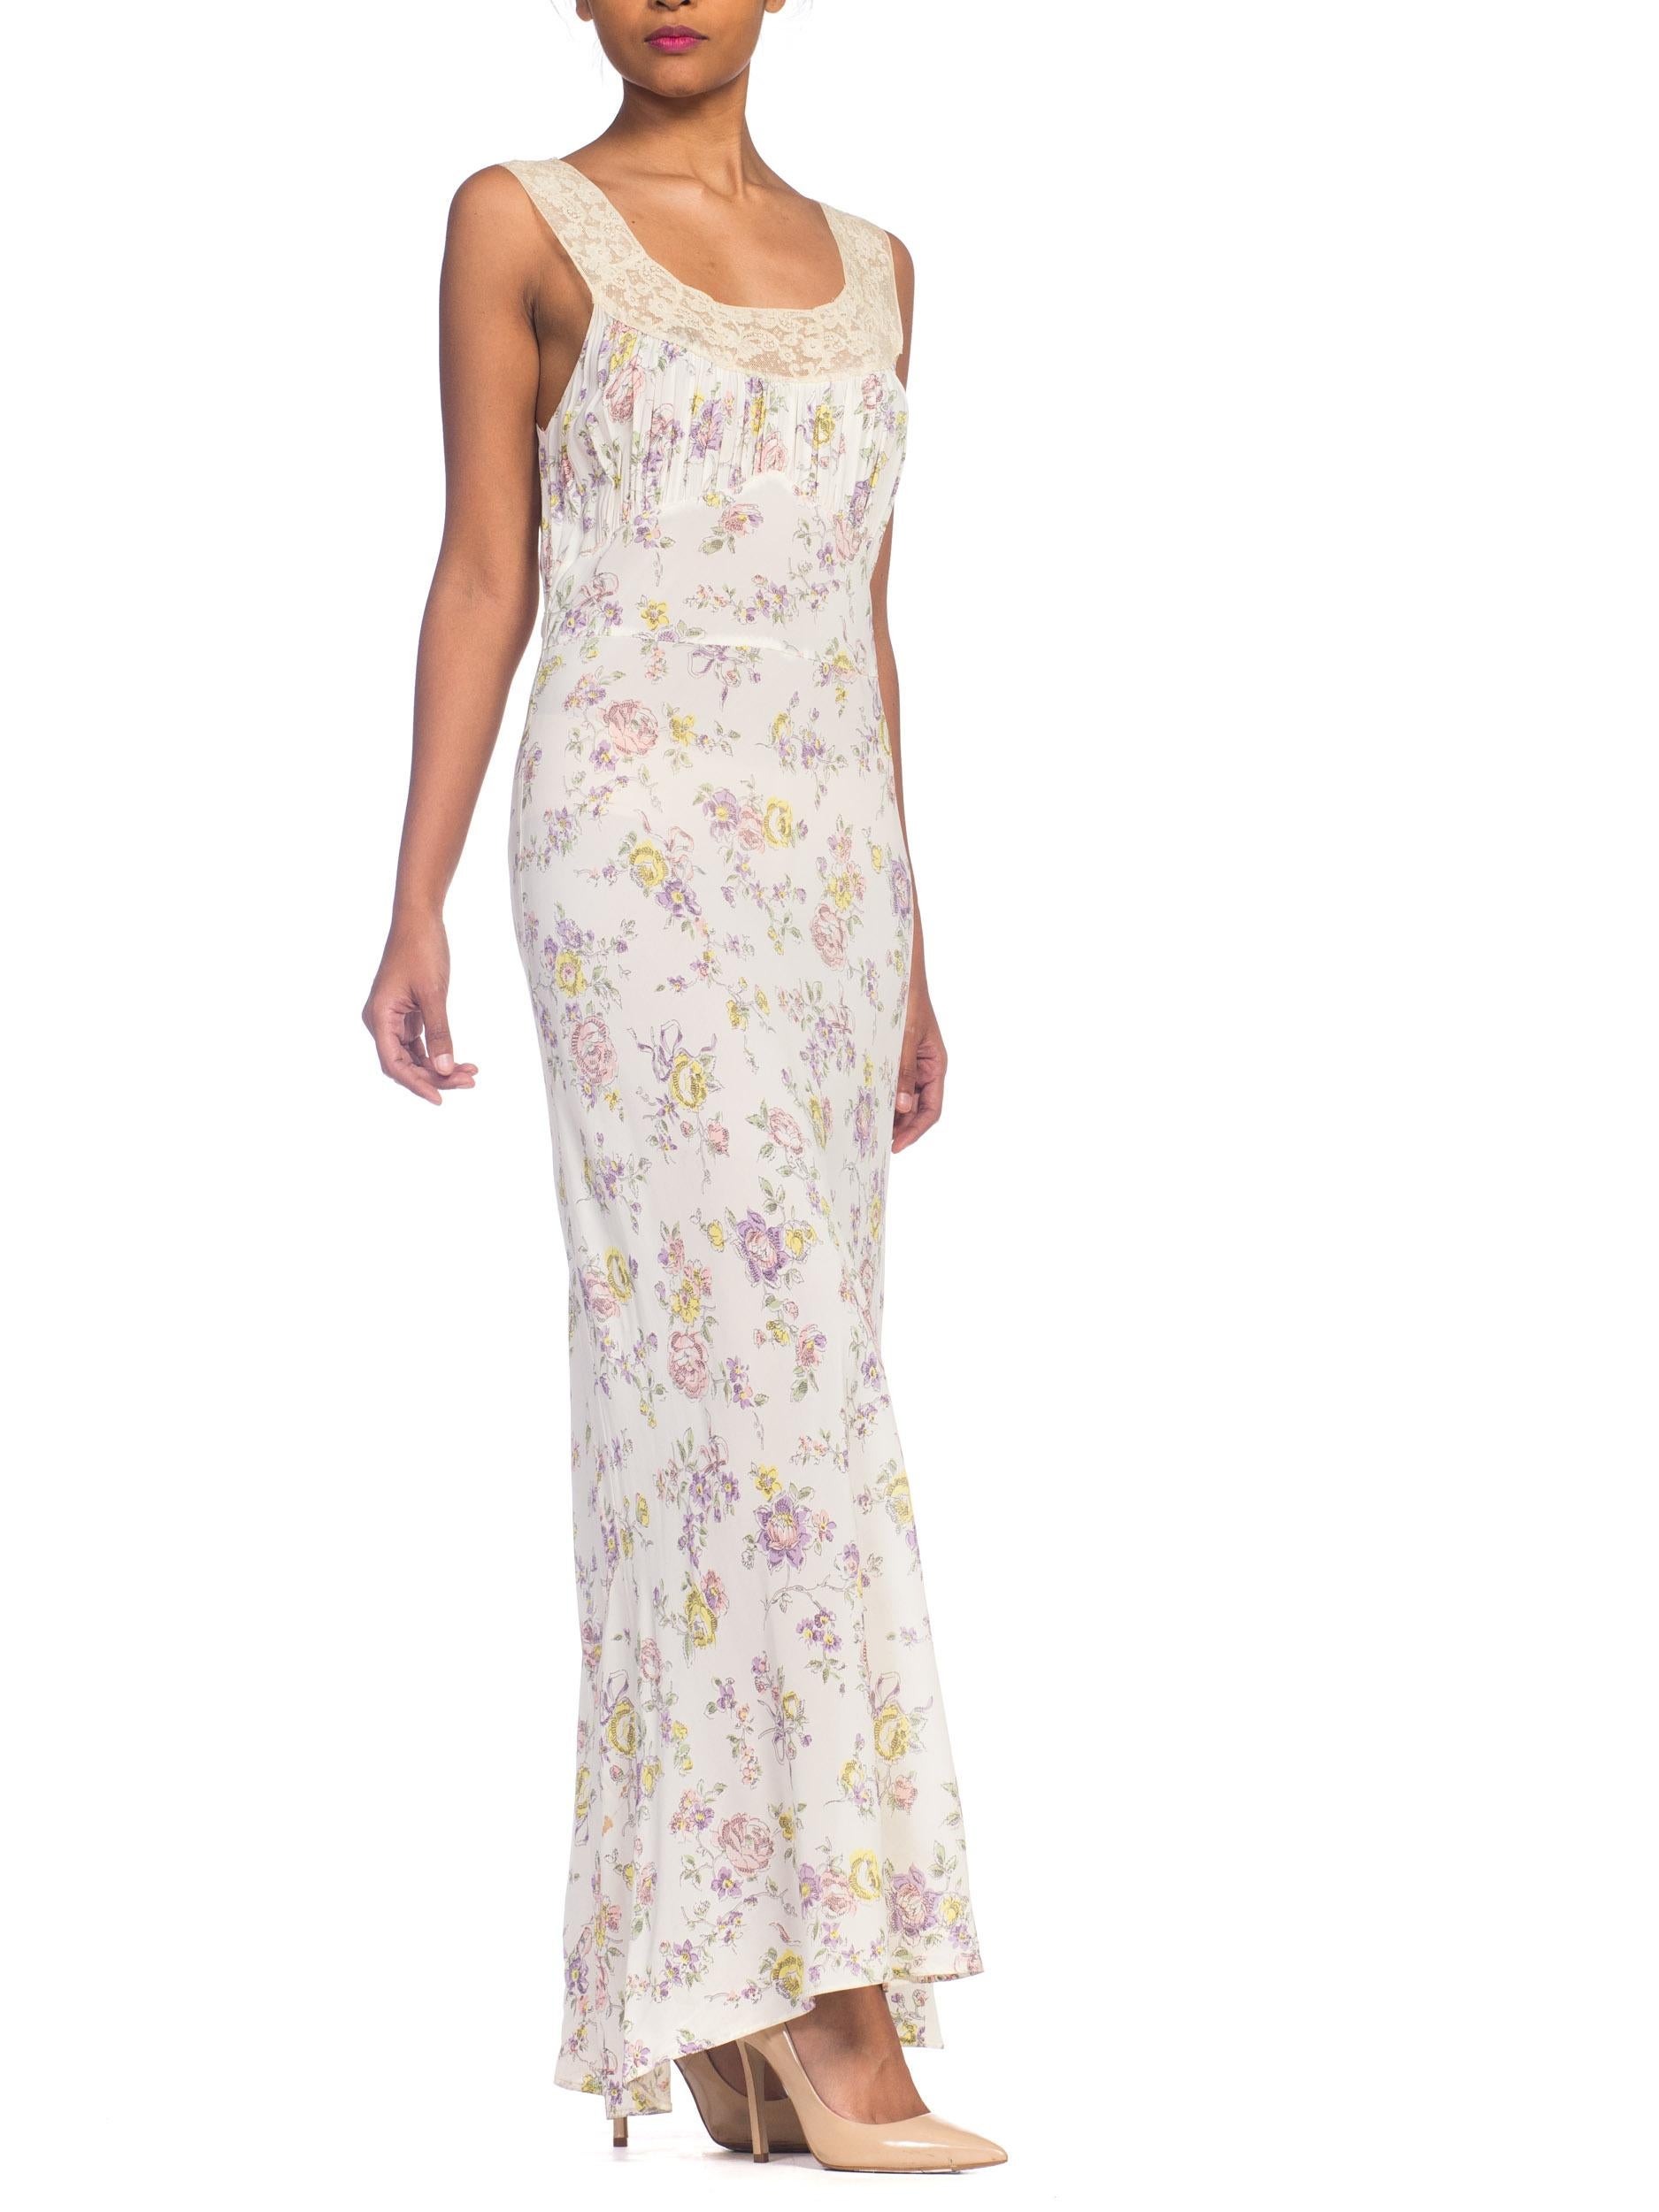 1930s Bias Cut Floral Rayon & Lace Negligee Slip Dress (Beige)